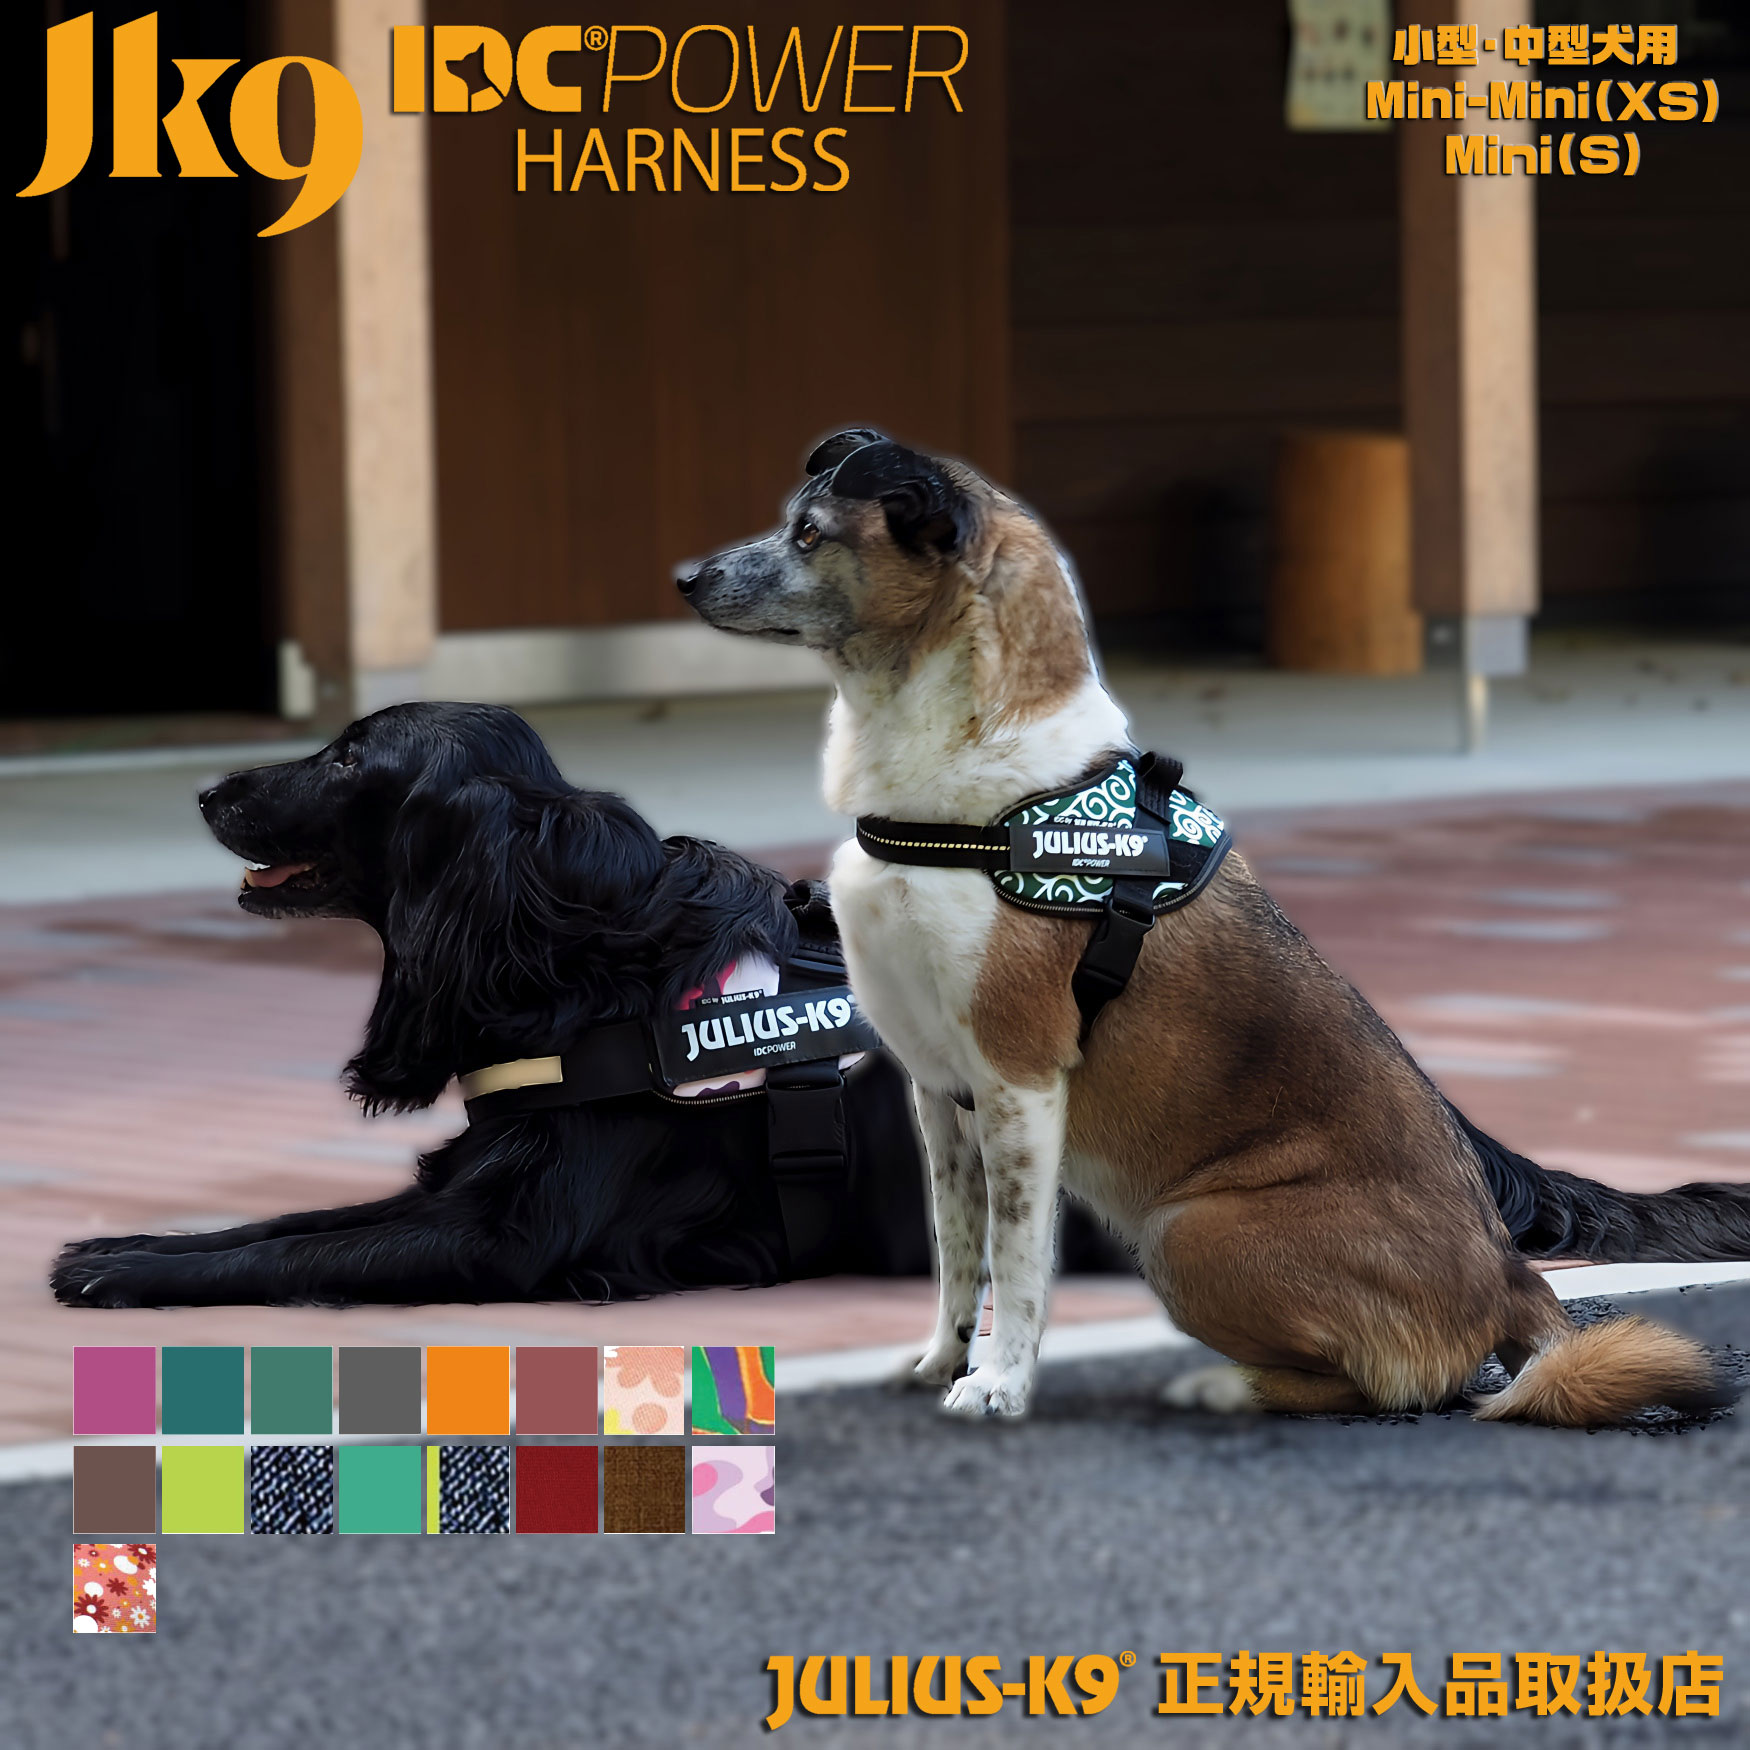 IDCパワーハーネス Mini Mini・Mini 胸囲40-67cm  Julius-K9 ユリウスケーナイン ハーネス 犬 ユリウスK9 ユリウスk9 小型犬 中型犬 犬用ハーネス 犬用 胴輪 